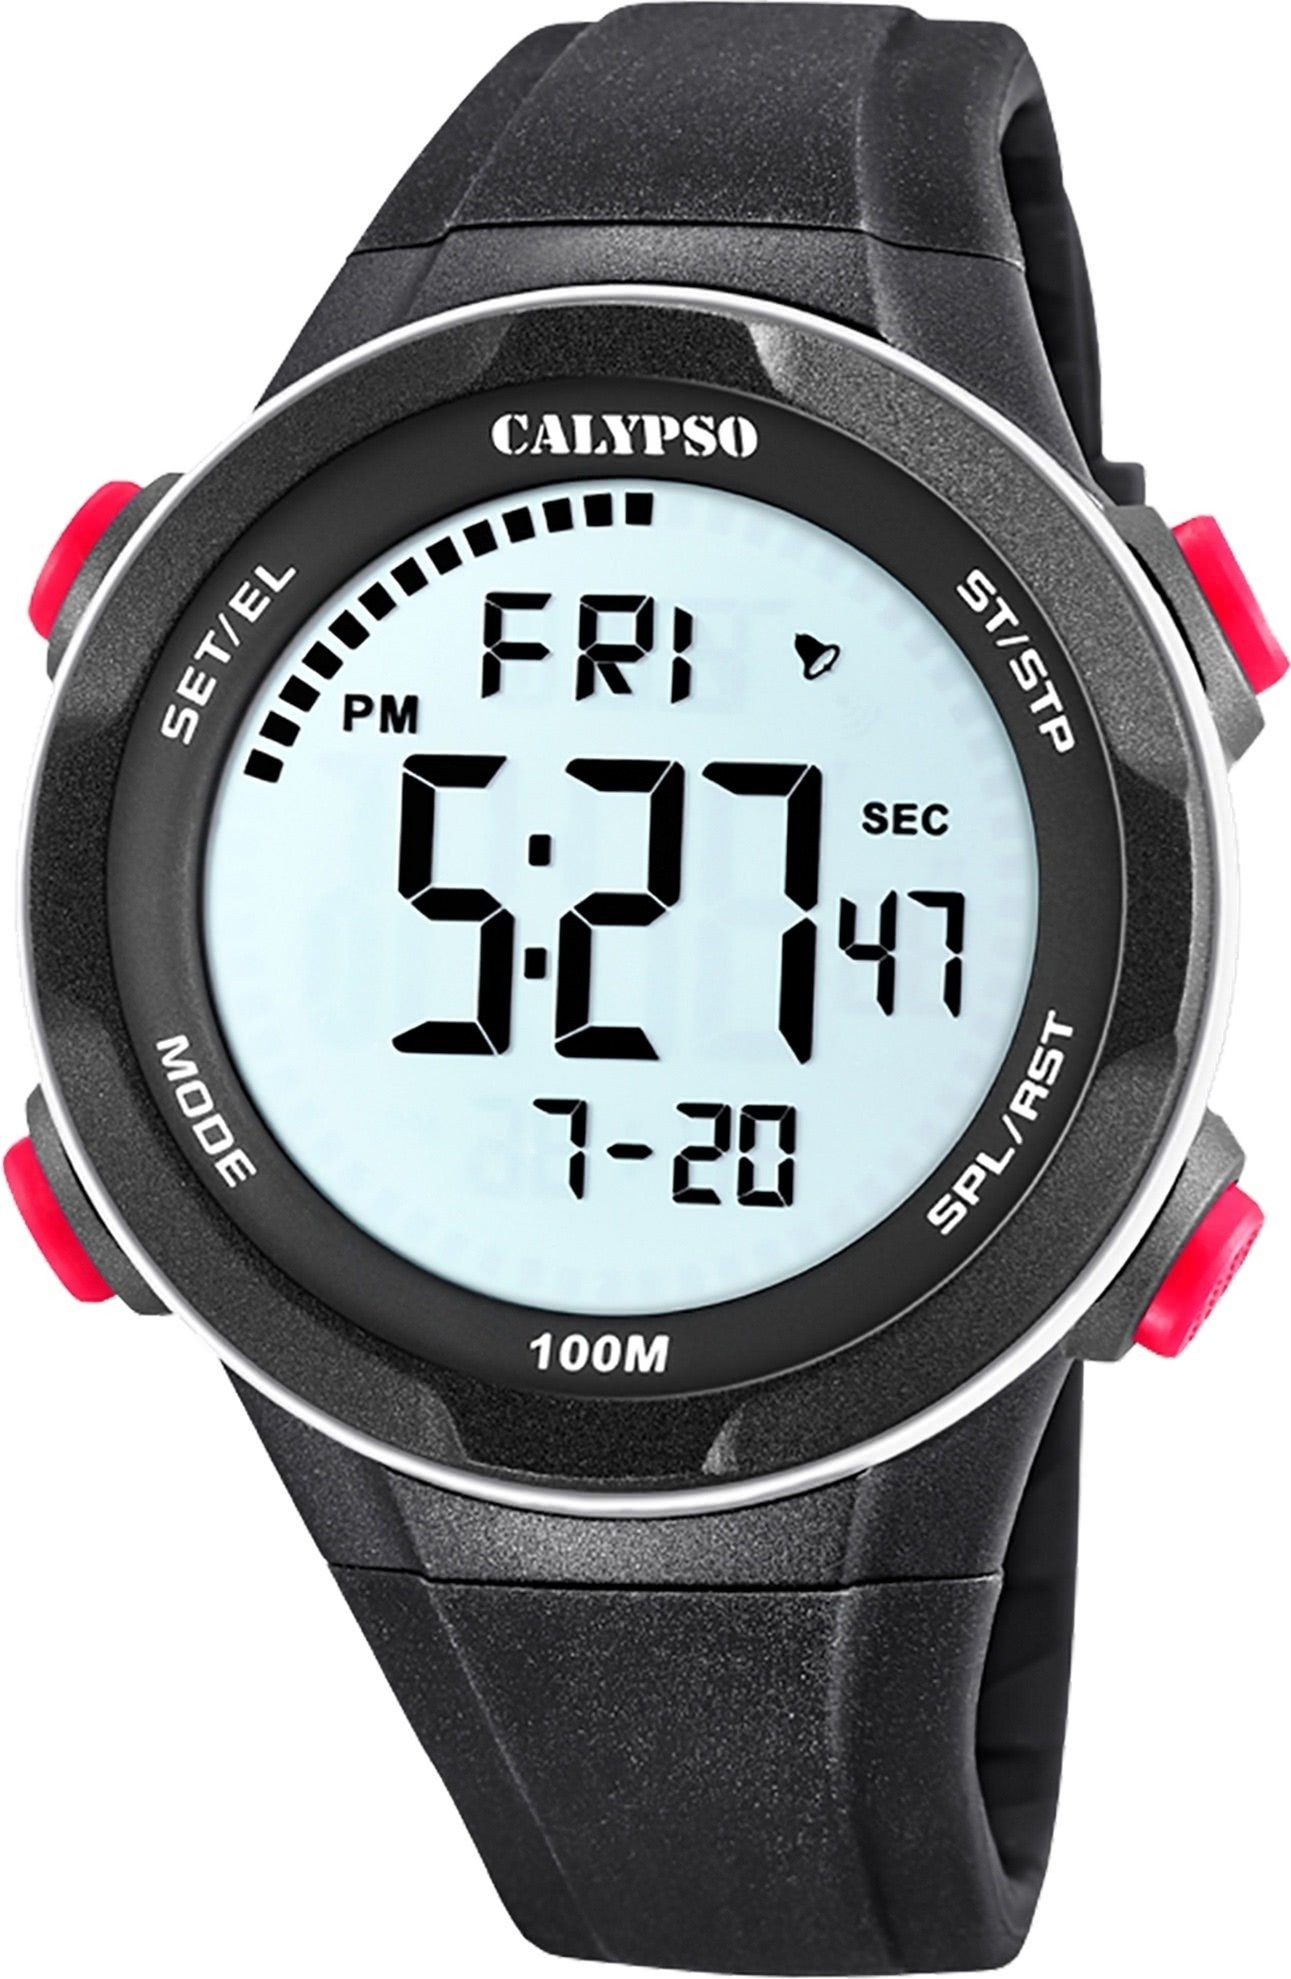 CALYPSO WATCHES Digitaluhr Calypso Herren Jugend Uhr Digital, (Digitaluhr), Herren, Jugend Armbanduhr rund, Kunststoffarmband schwarz, Casual